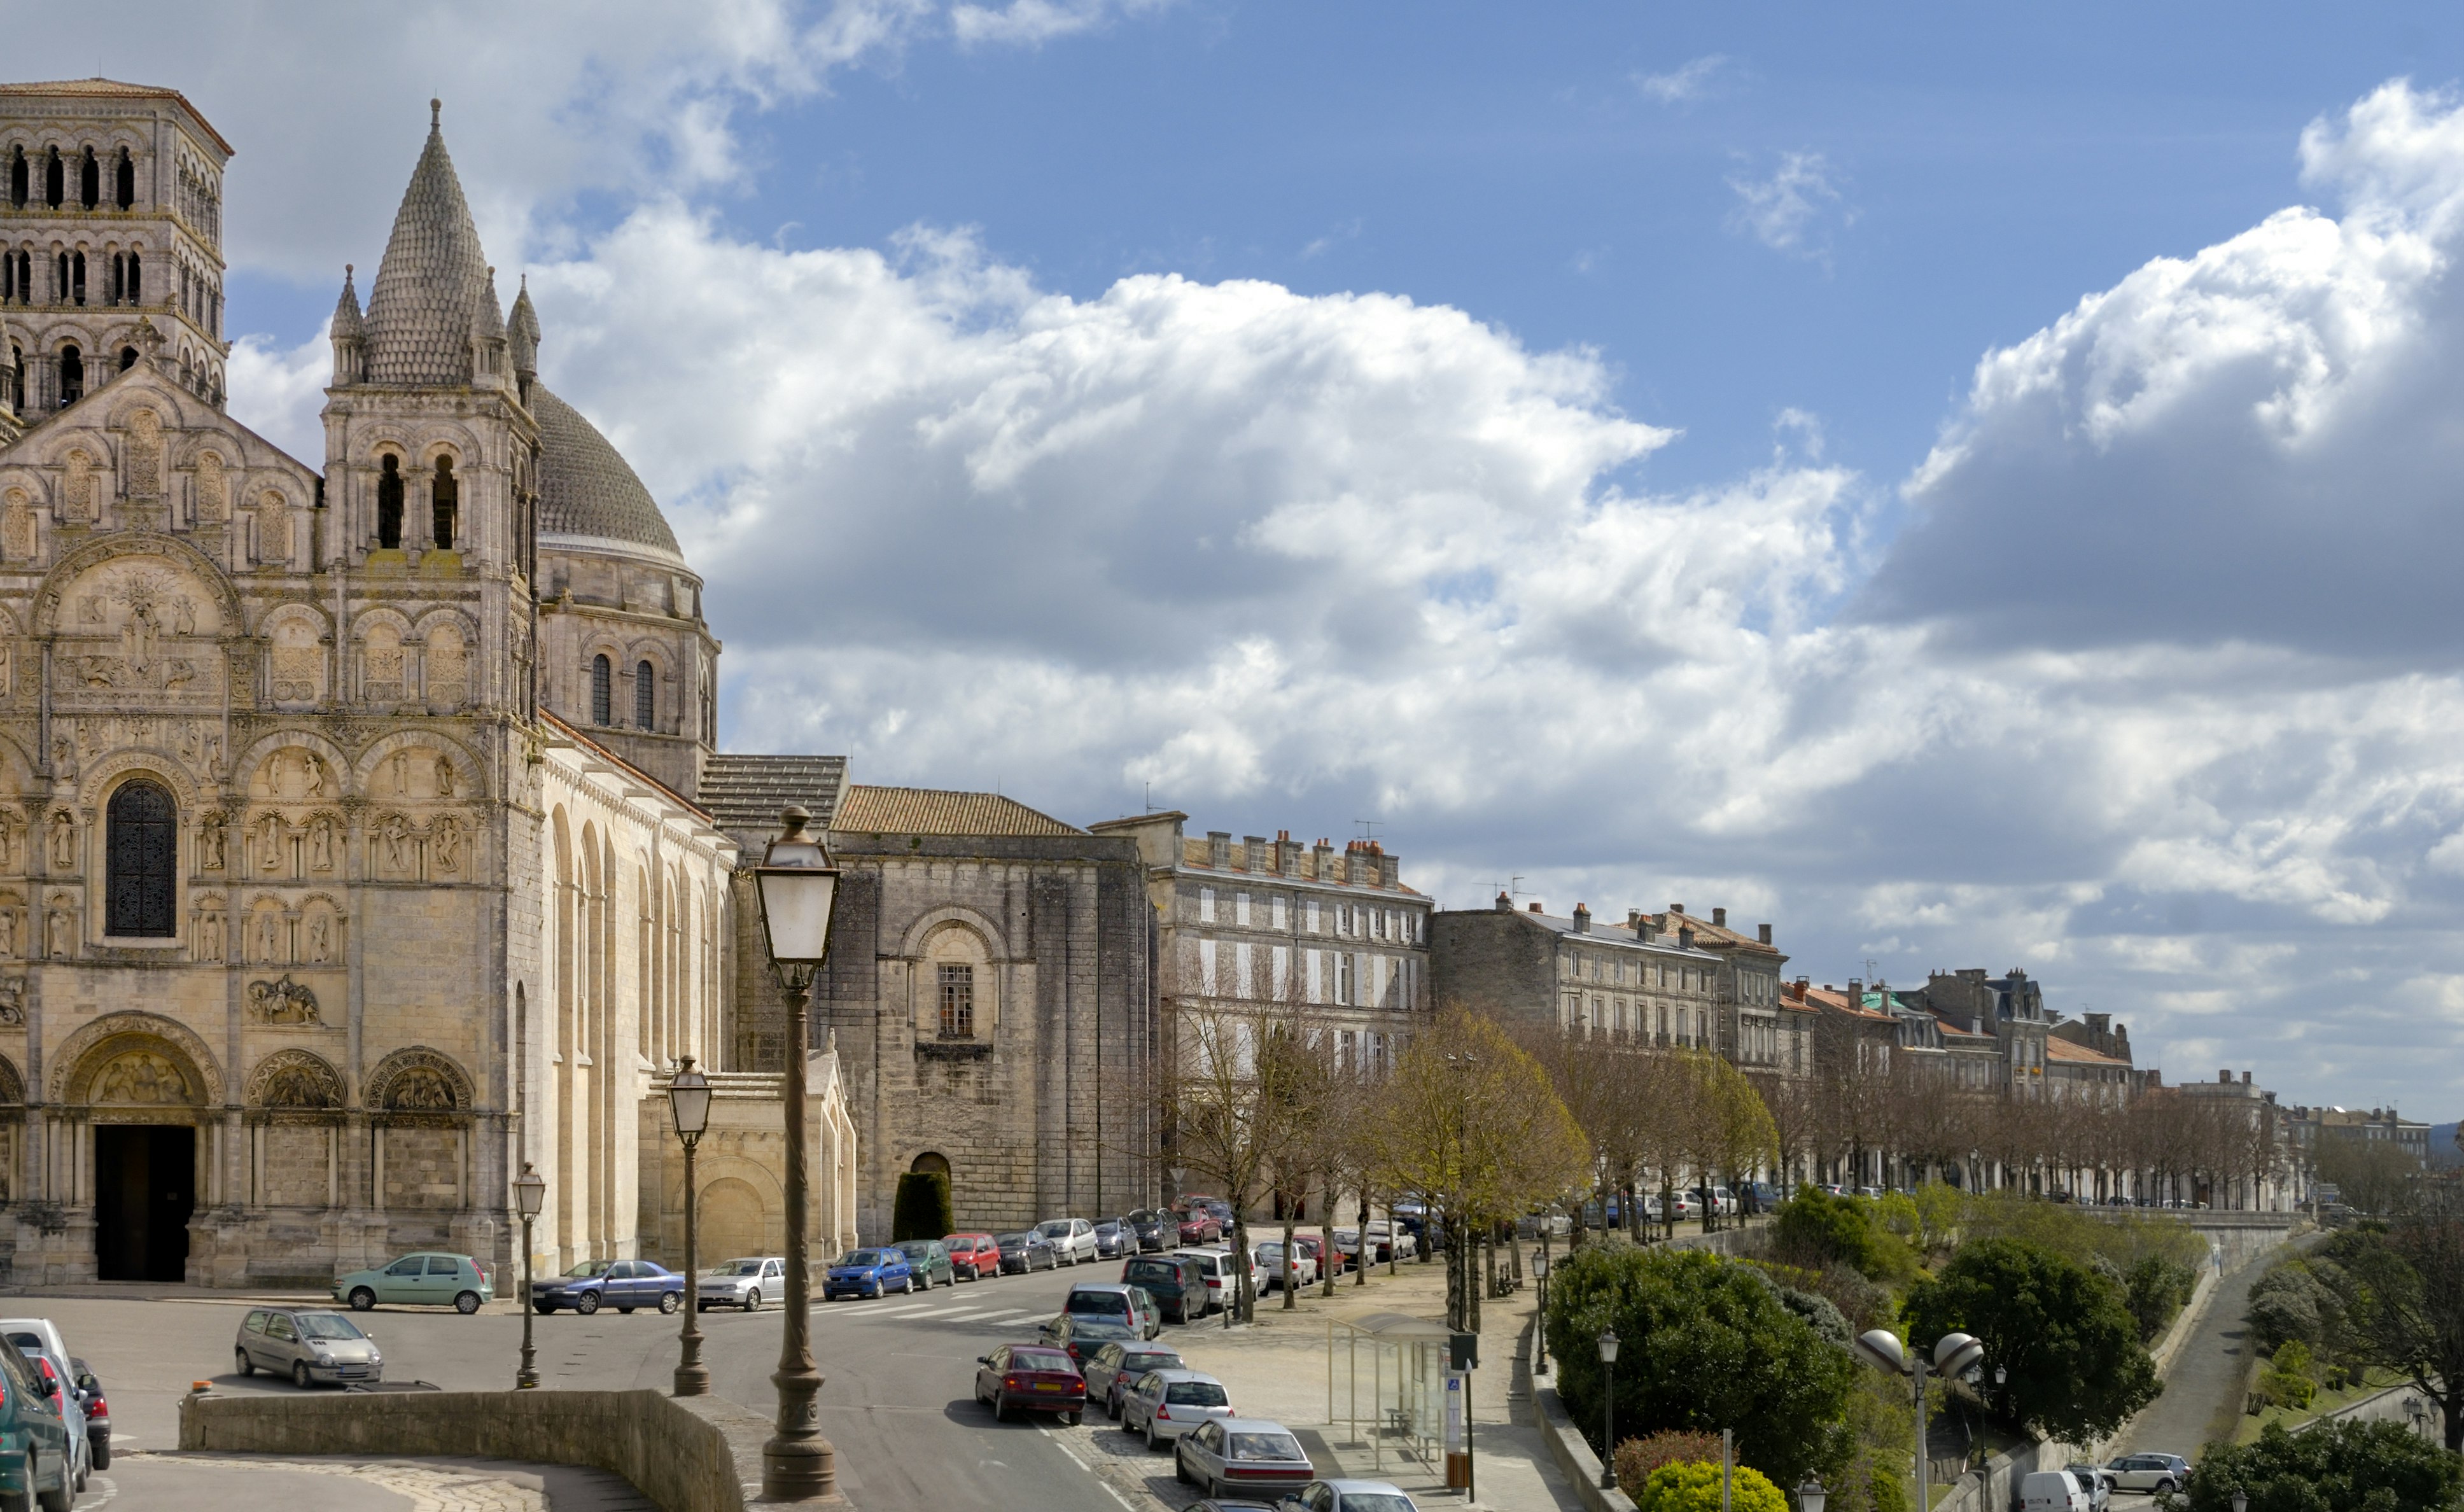 The city of Angoulême